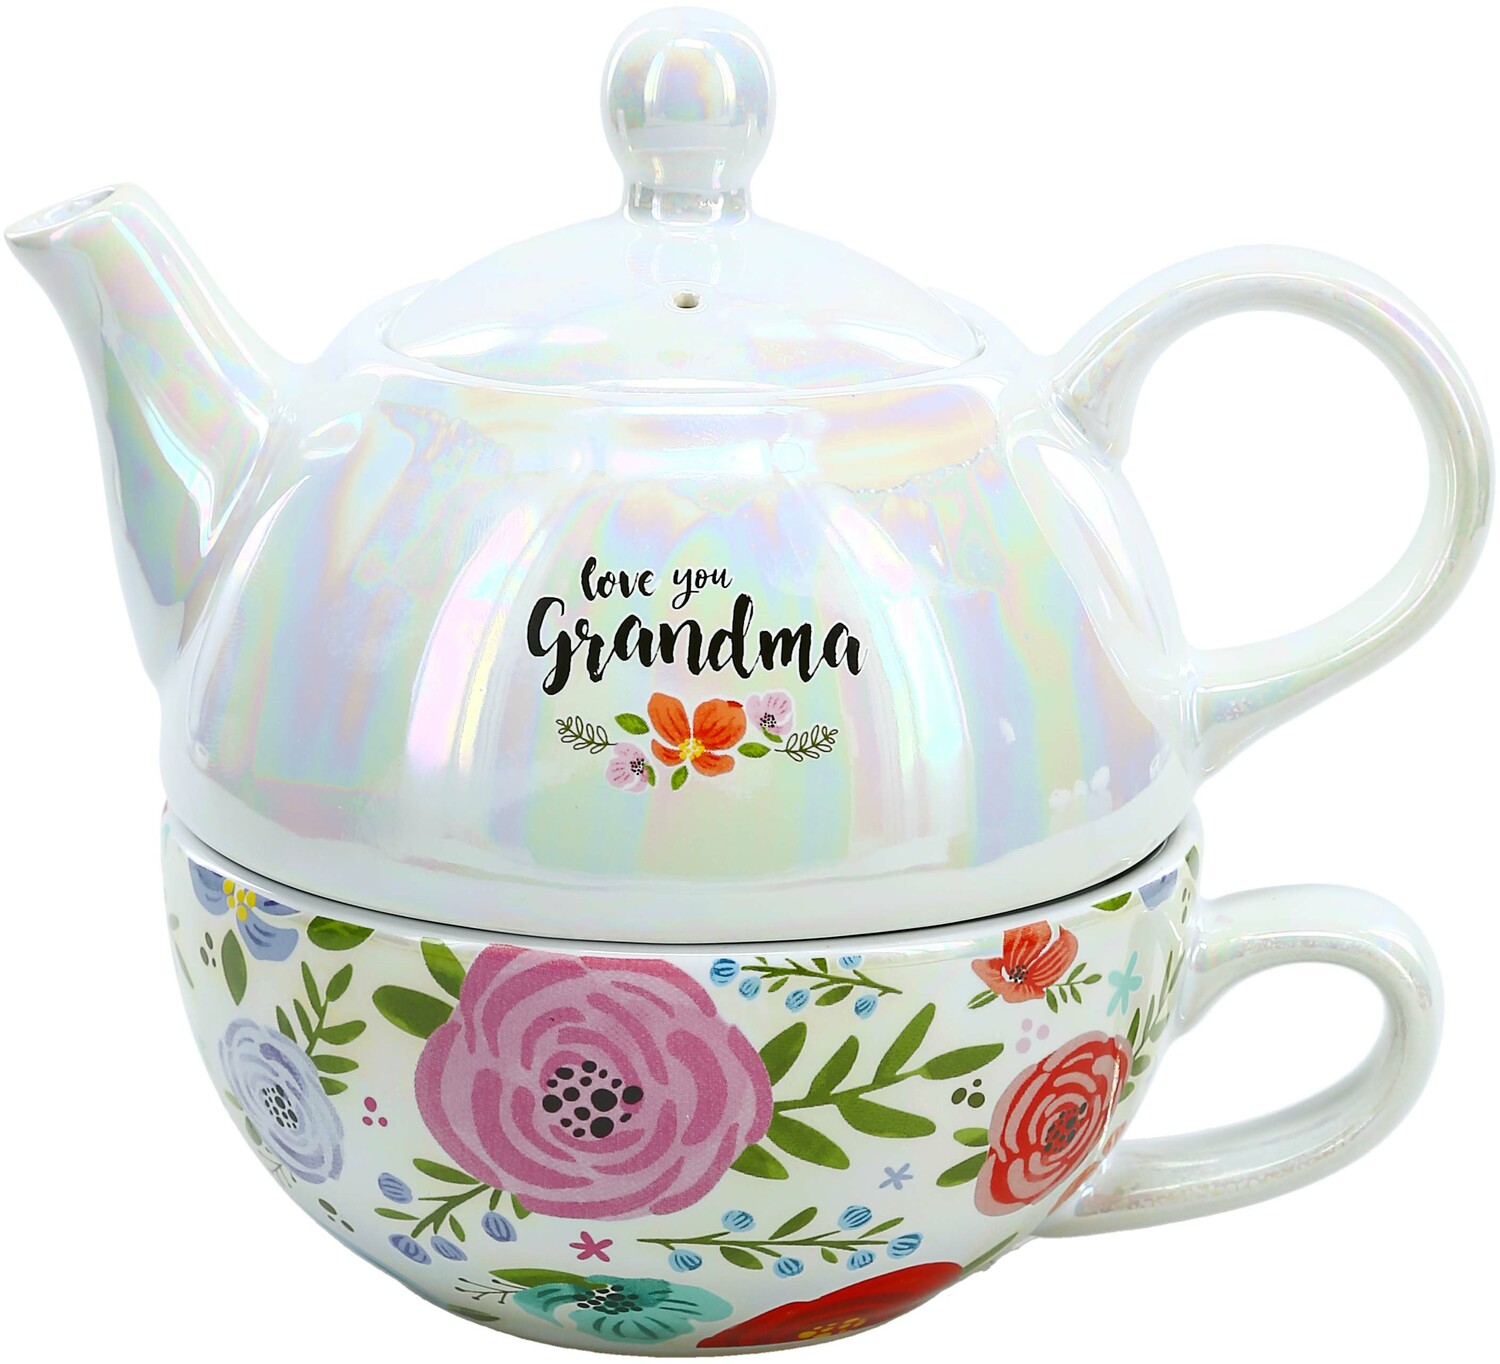 Grandma by Bunches of Love - Grandma - Tea for One
(14.5 oz Teapot & 10 oz Cup)